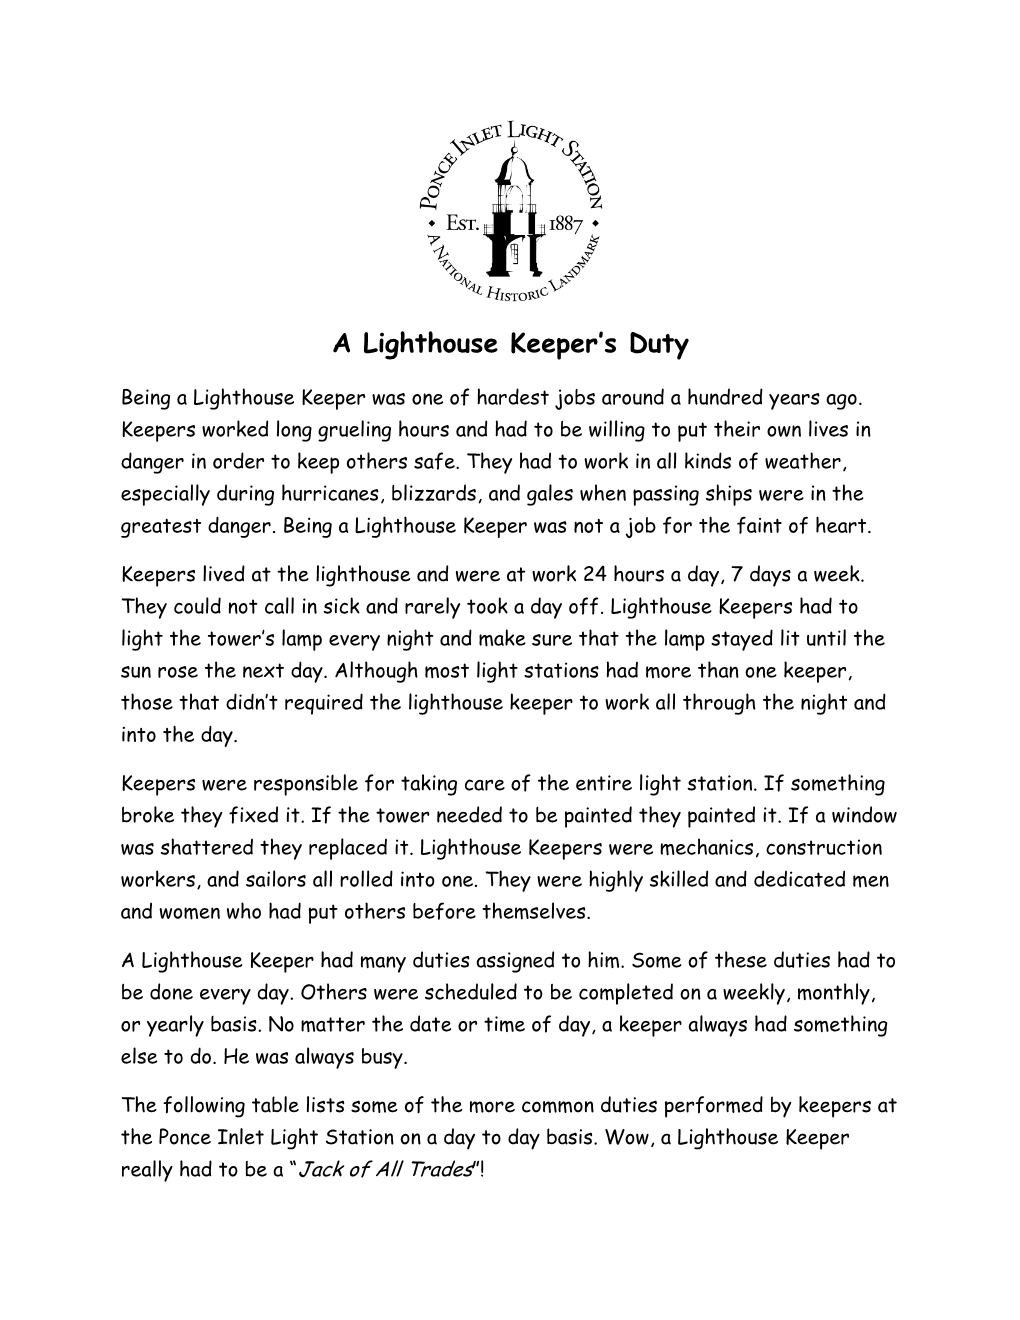 A Lighthouse Keeper's Duty